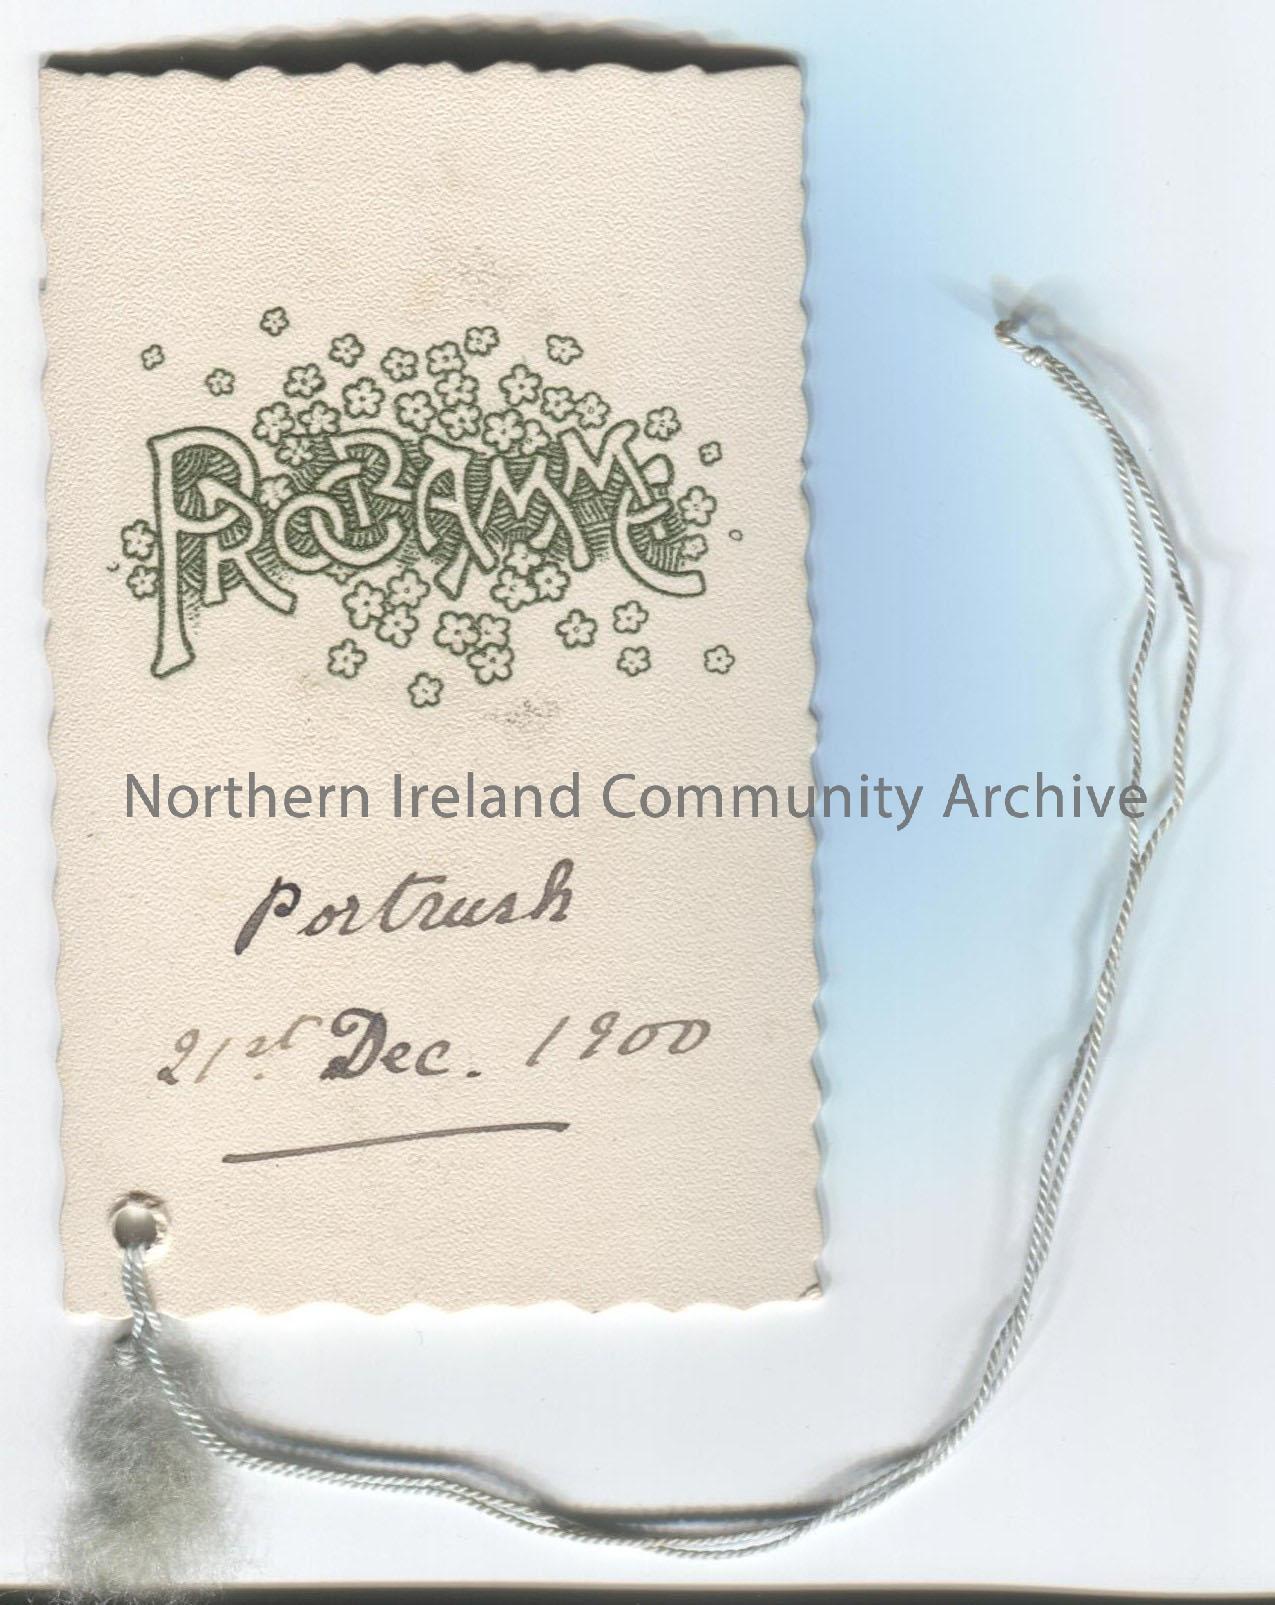 Dance card – Programme, Portrush, 21st Dec 1900. 20 dances listed on reverse. Green string attached.